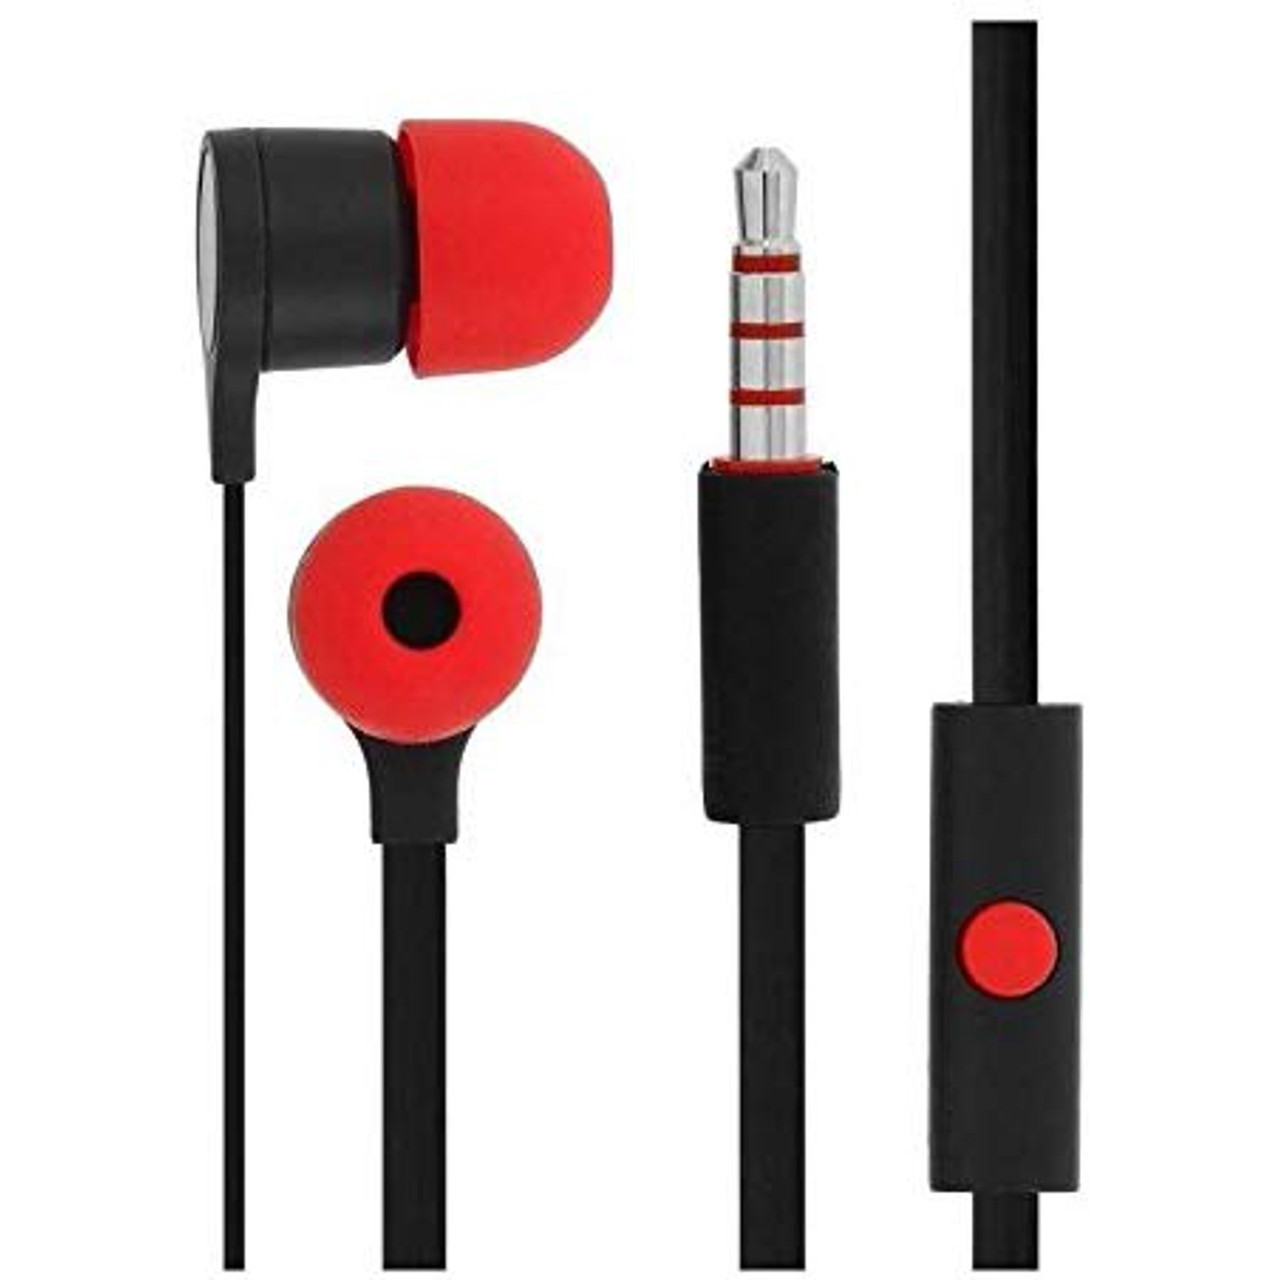 3.5mm Earphone Stereo Audio Headset Headphone For HTC One HTC Butterfly HTC 8X 8S MAX300 T528 X920E 802W 802D ONE M7 Black Red